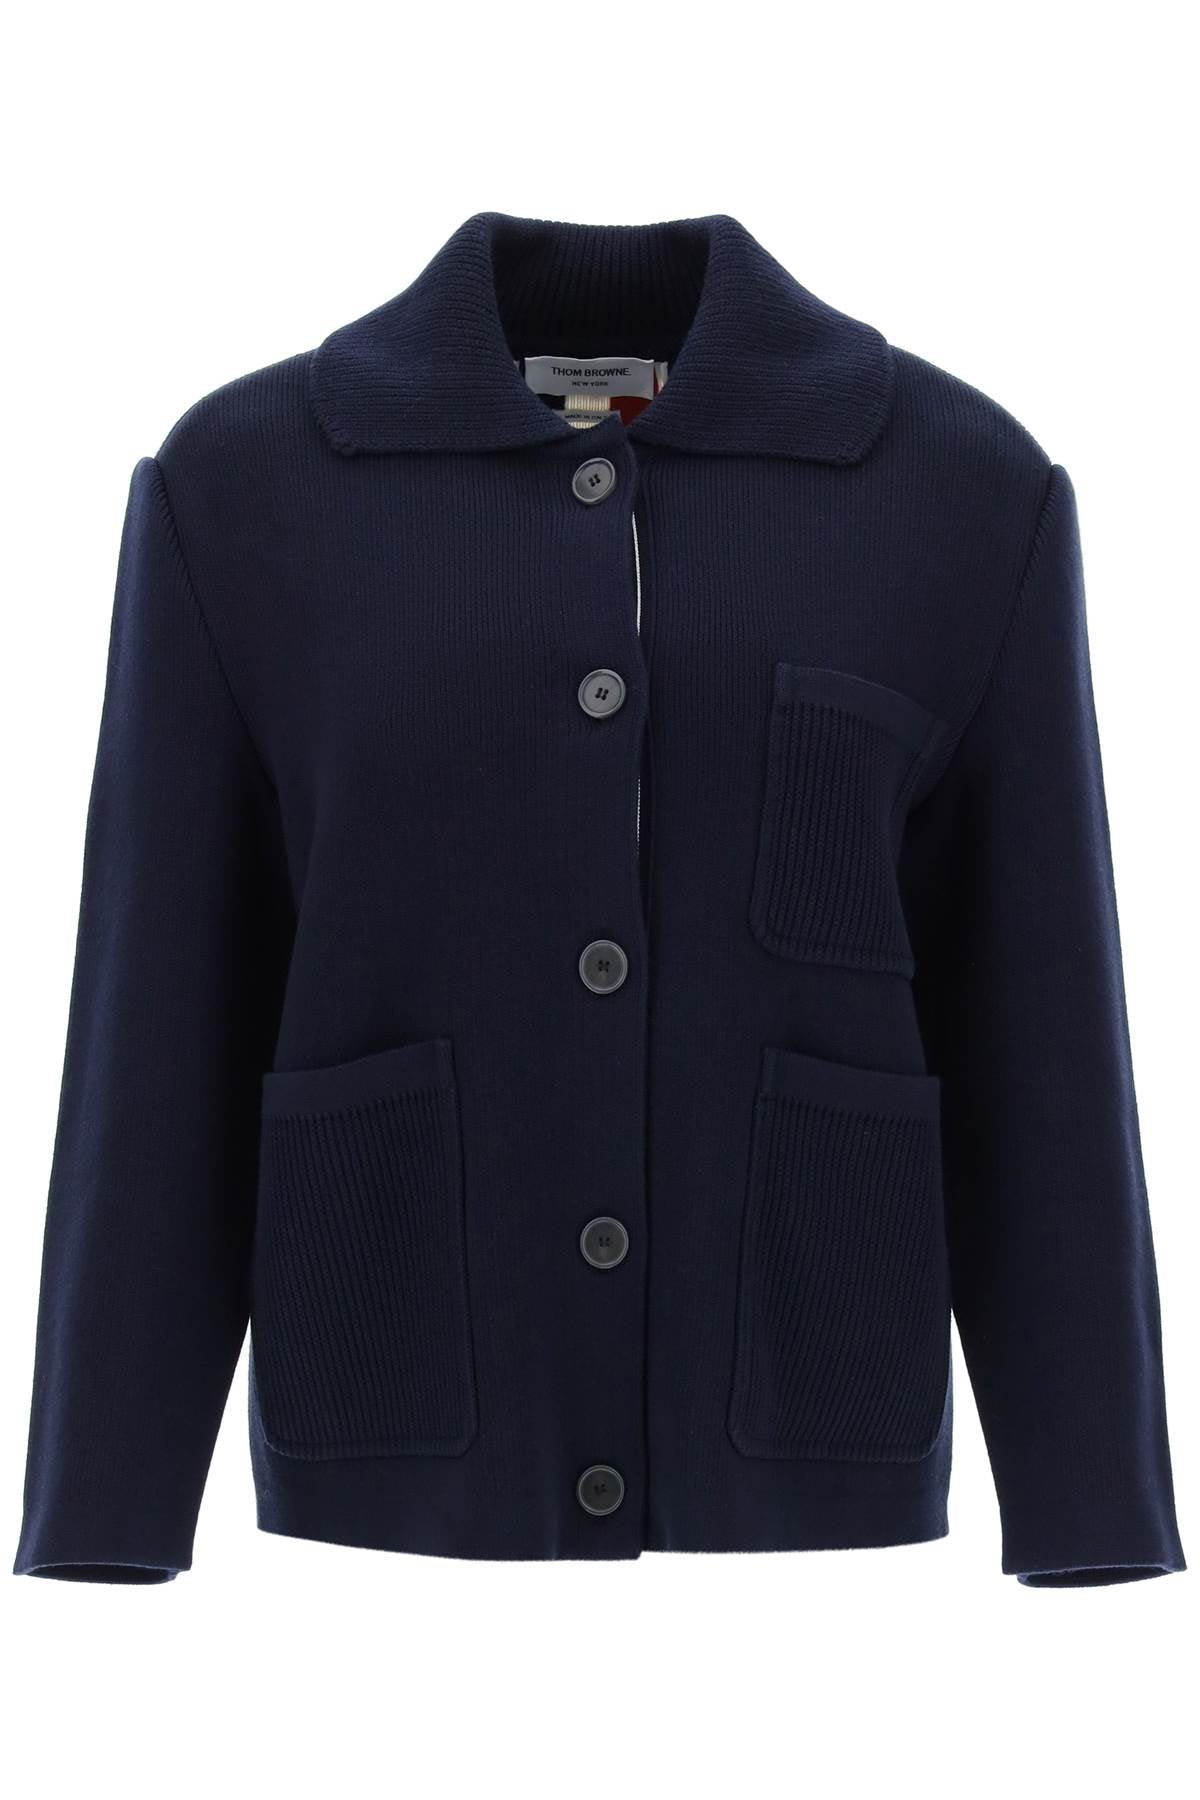 Thom browne cotton-cashmere knit jacket-0